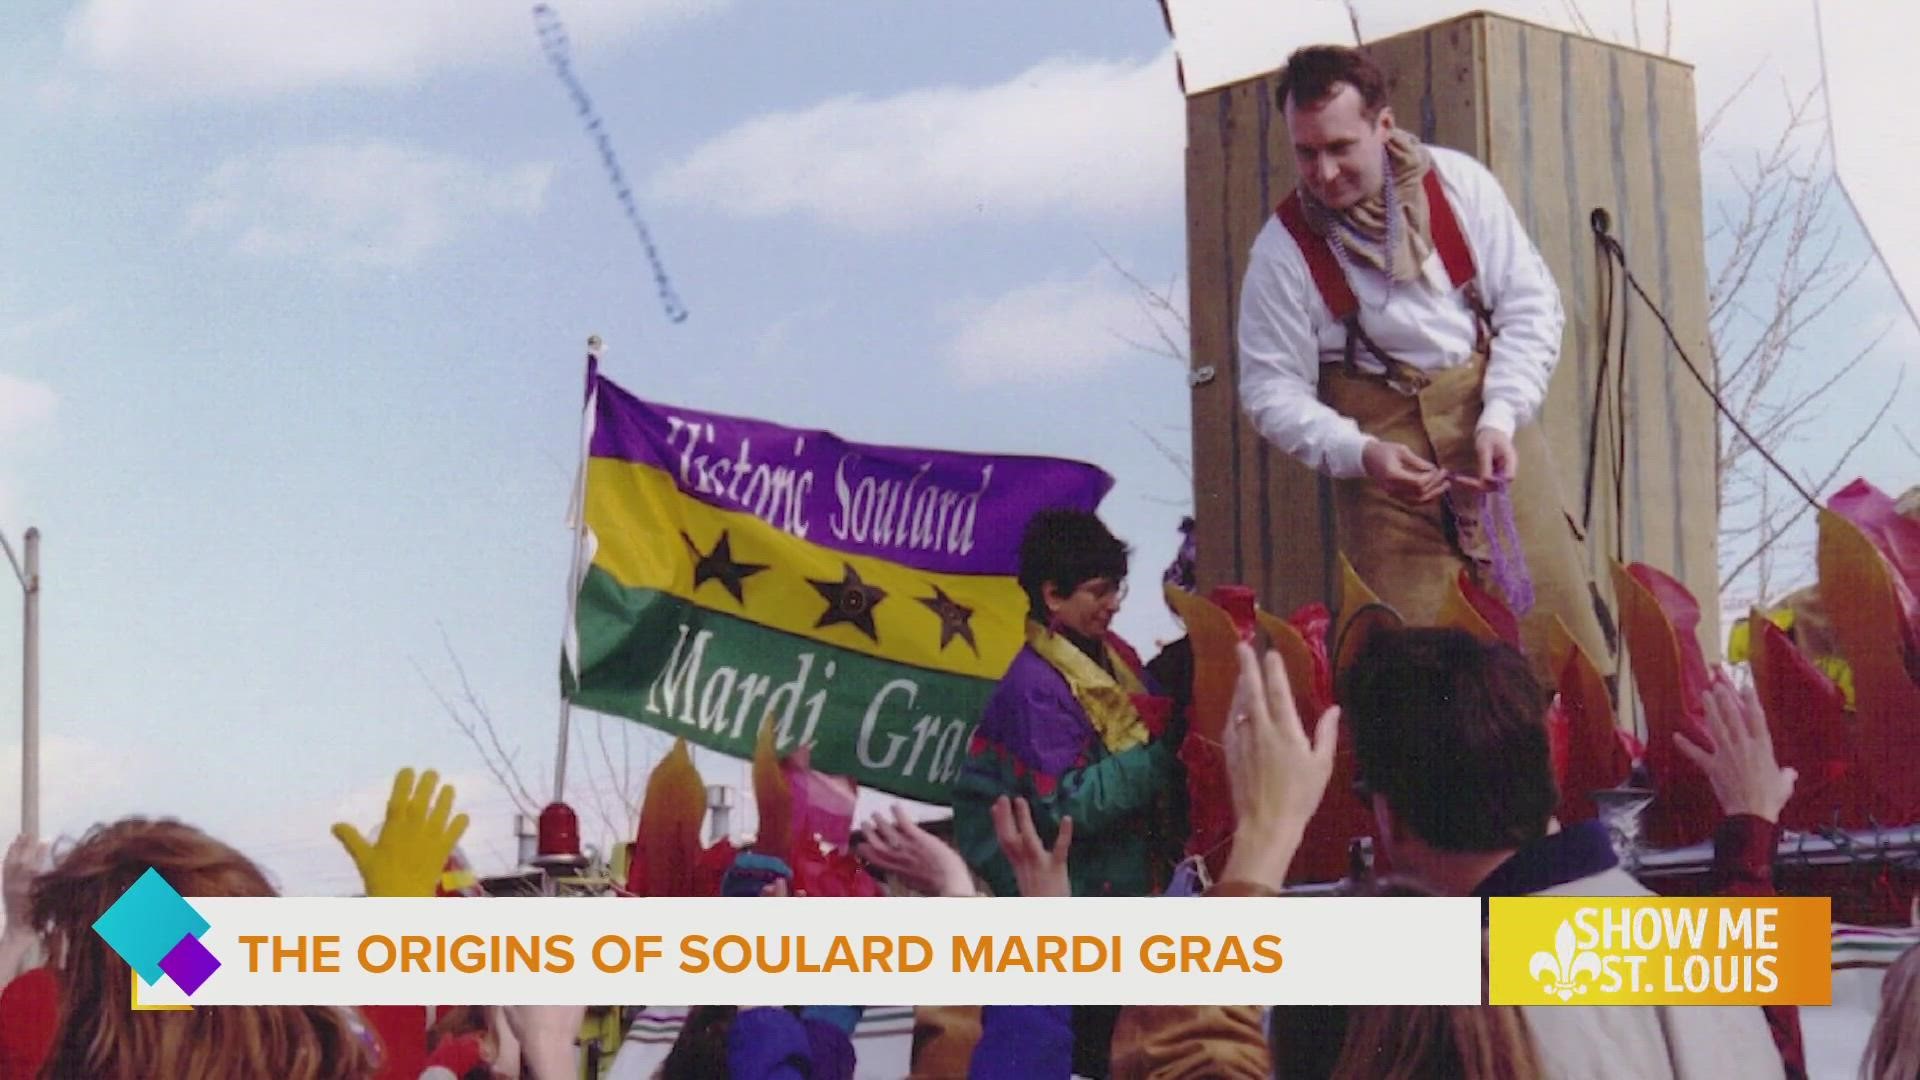 The origins of Soulard Mardi Gras